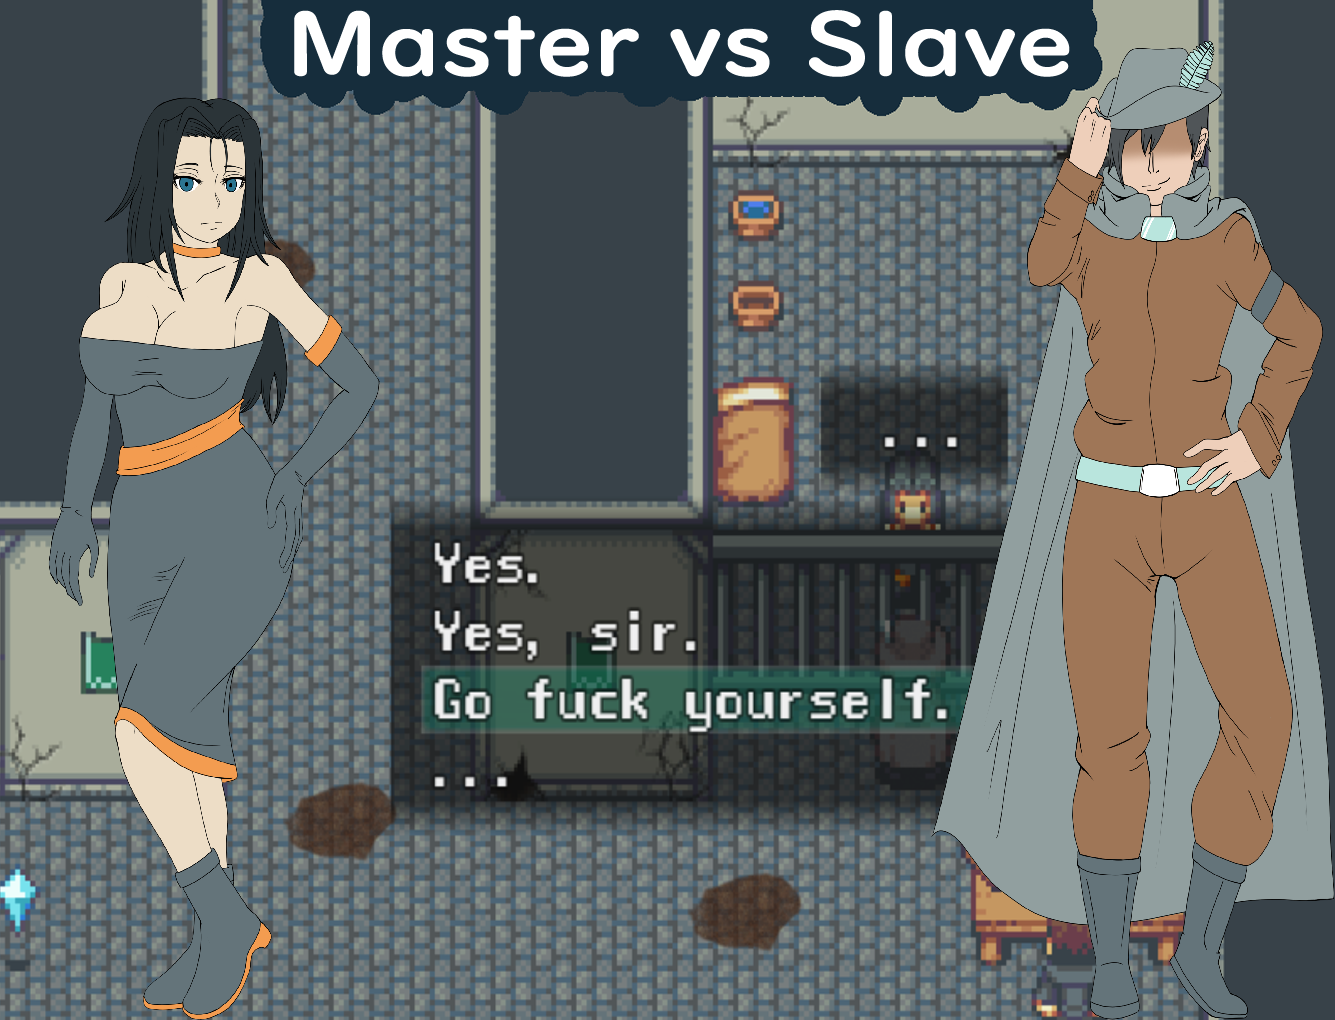 Master vs Slave [DEMO] - free game download, reviews, mega - xGames